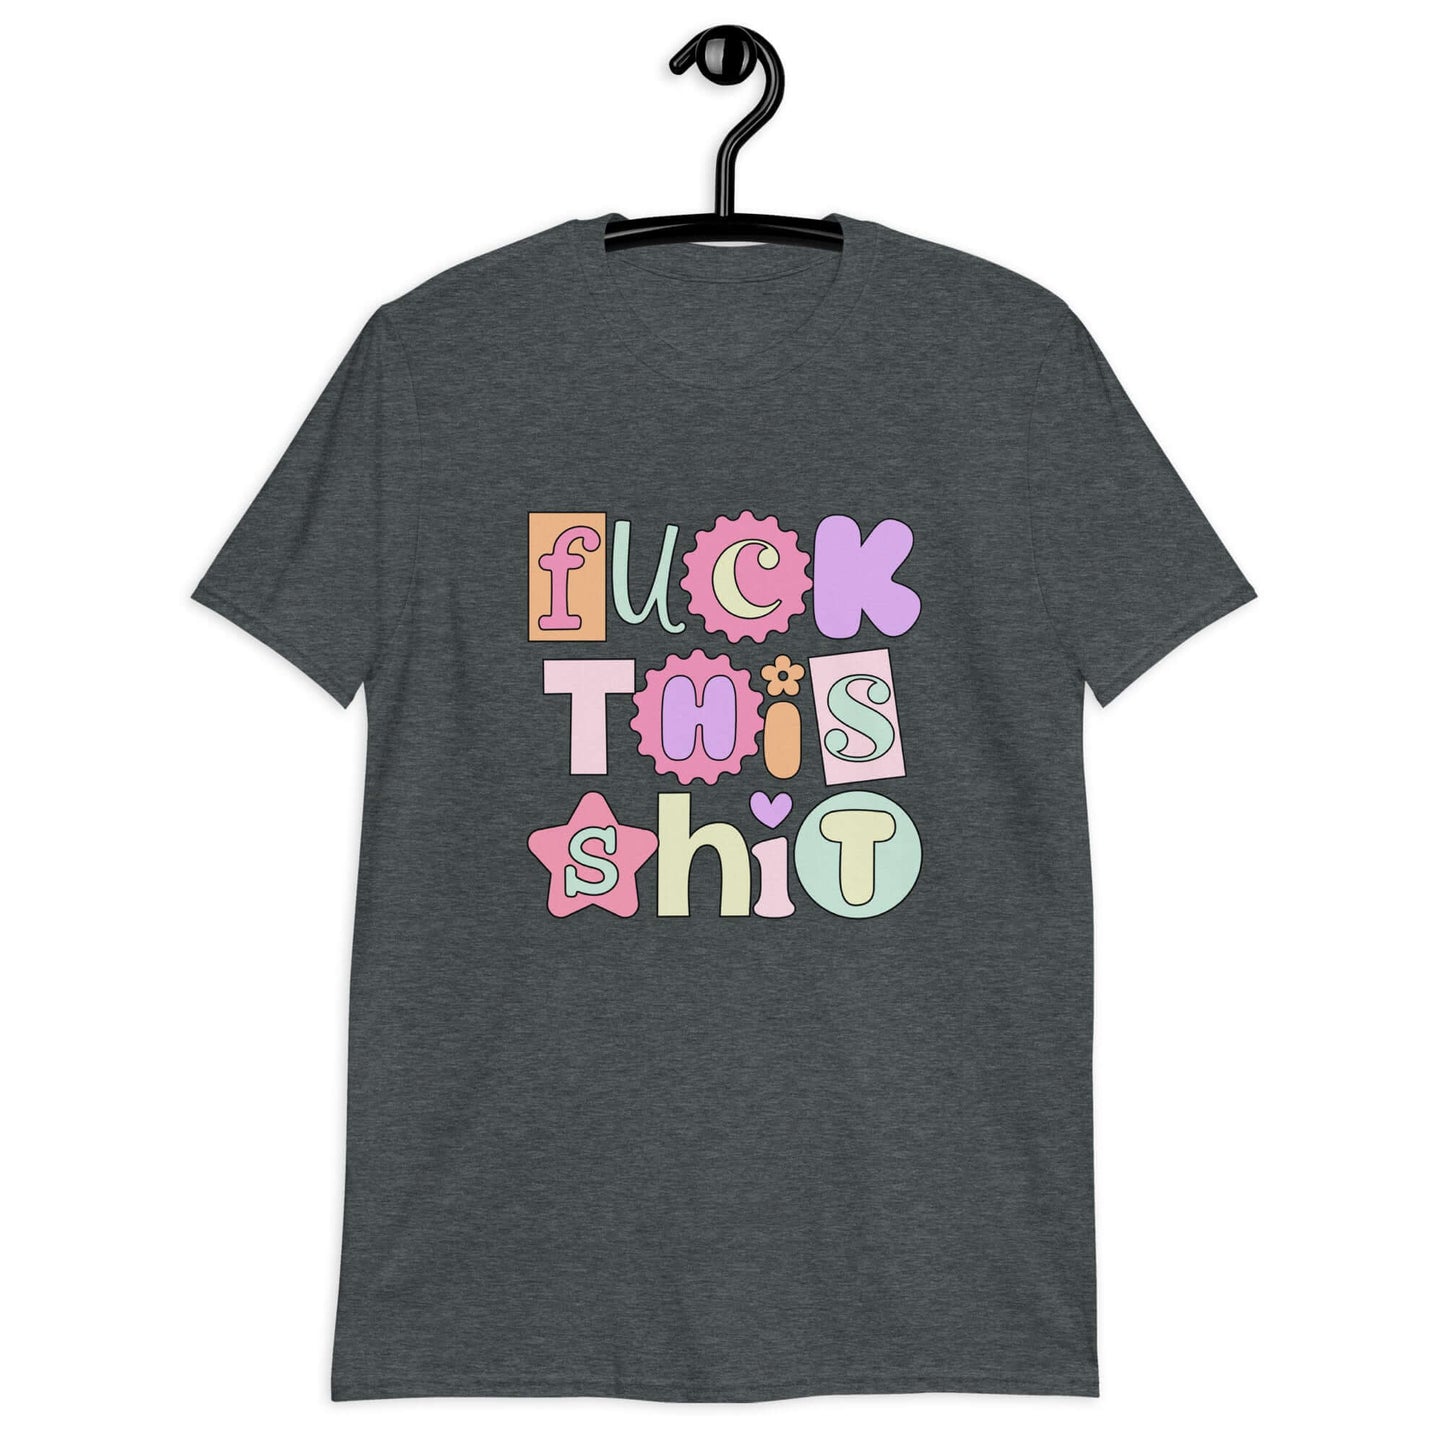 Fuck this shit t-shirt